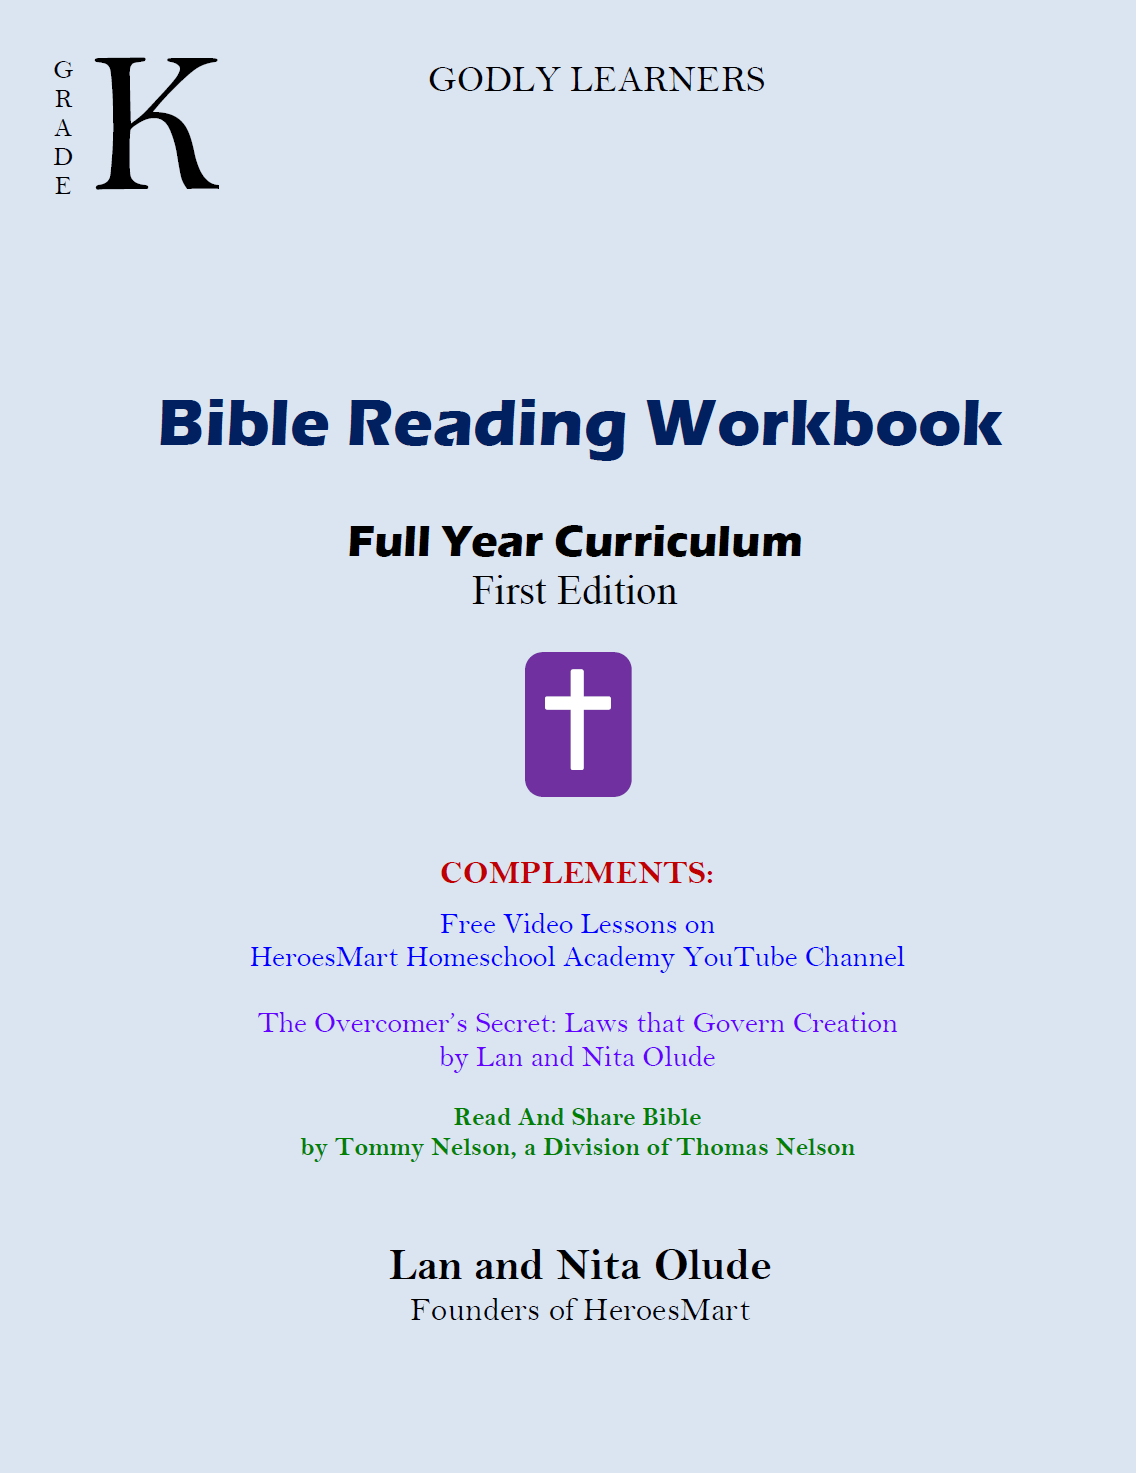 Grade-K Bible Reading Full Year Curriculum